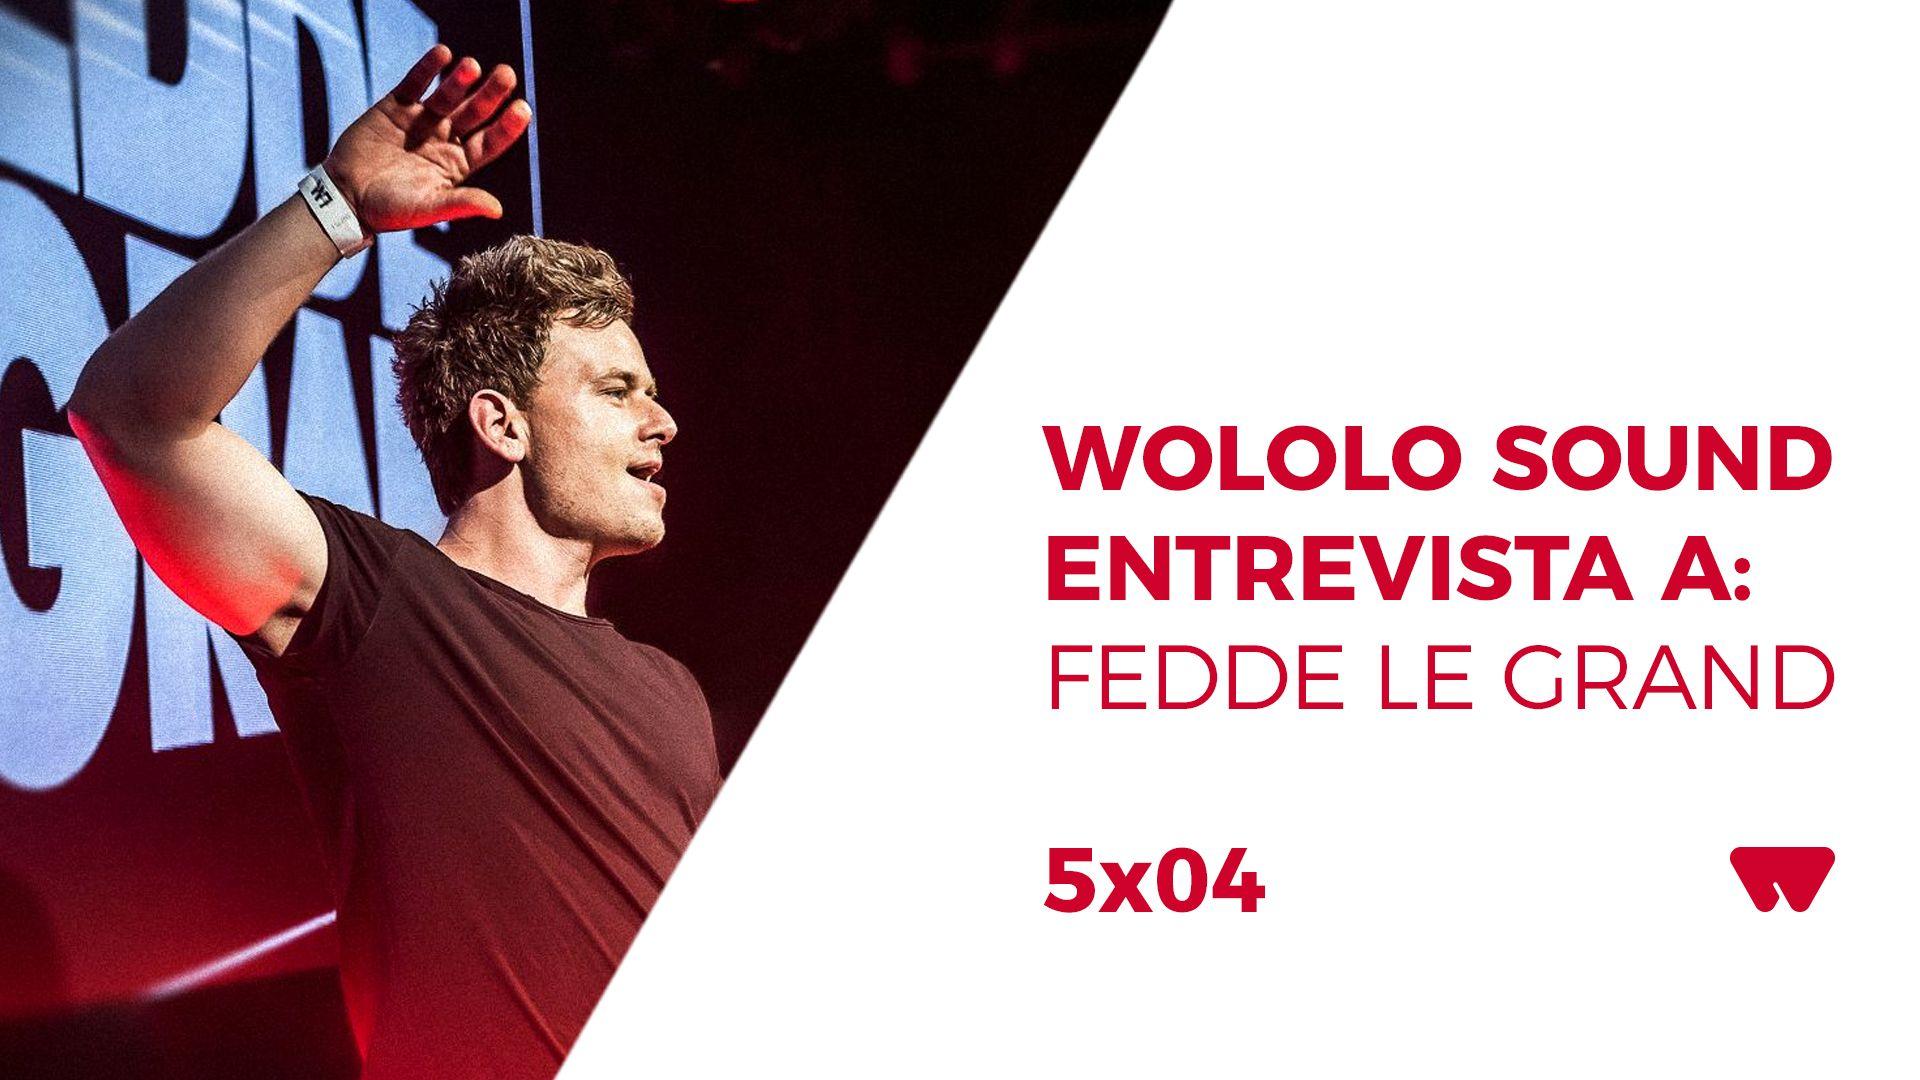 Wololo Sound entrevista a Fedde Le Grand